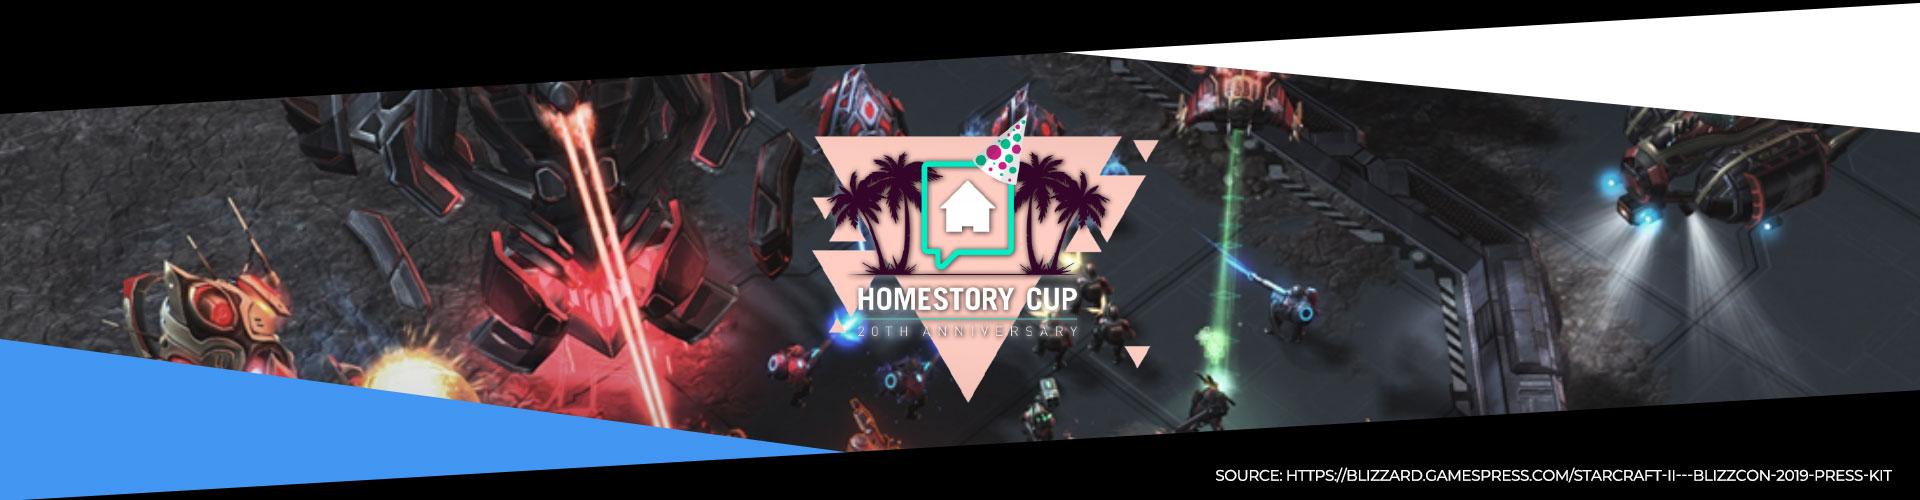 Starcraft 2 - Homestory Cup 20